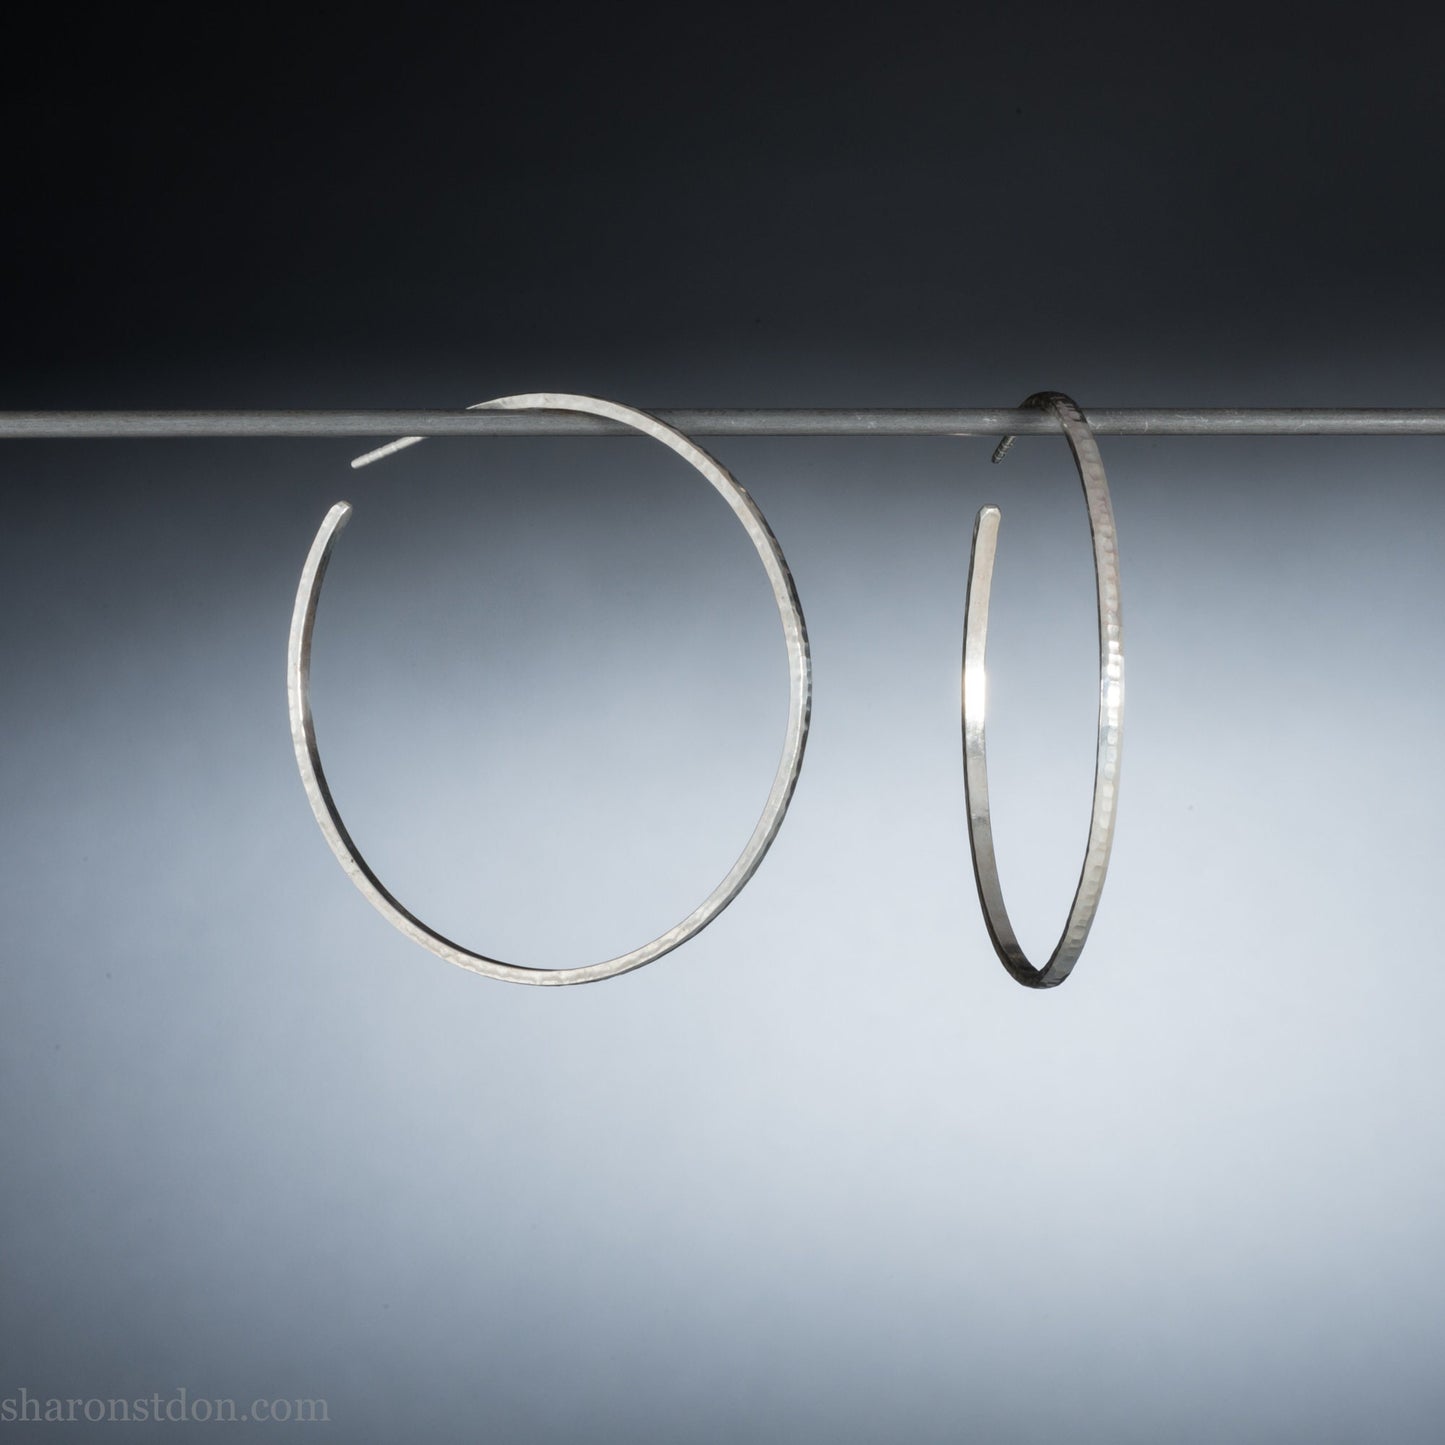 Handmade 925 sterling silver hoop earrings. Comfortable, lightweight, daily wear earrings made by Sharon SaintDon in North America. 50mm diameter.